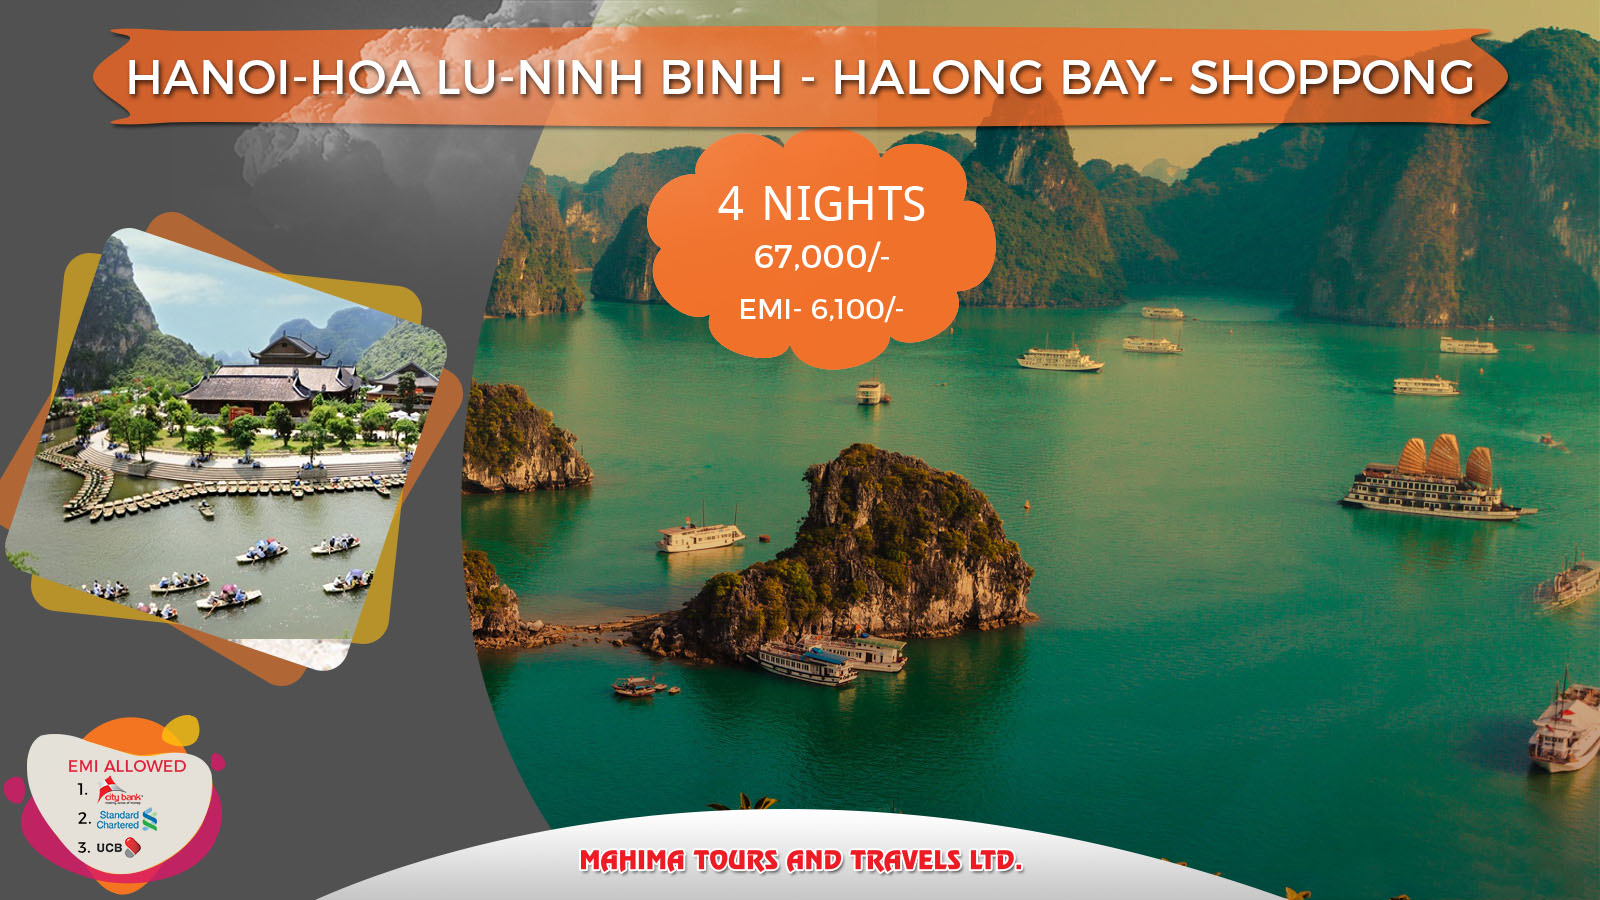 HANOI-HOA LU-NINH BINH-HALONG BAY (VIETNAM)